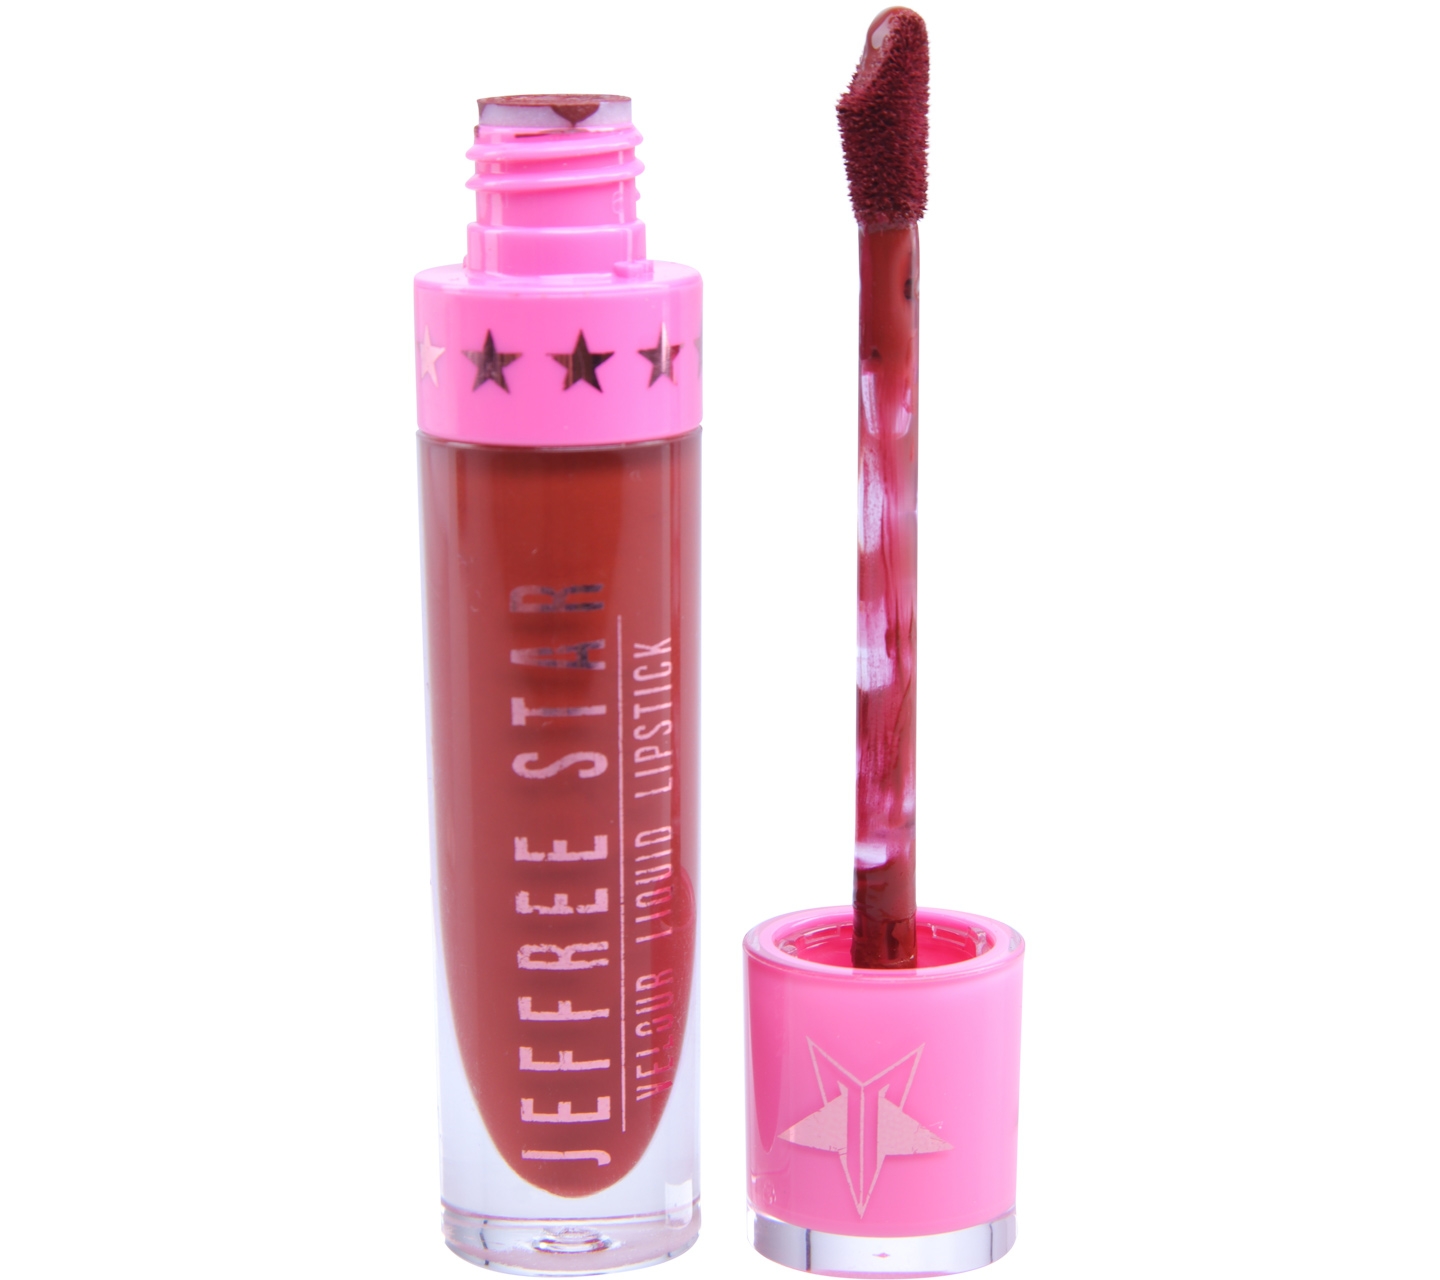 Jeffree Star Unicorn Blood Velour Liquid Lipstick Sets and Palette